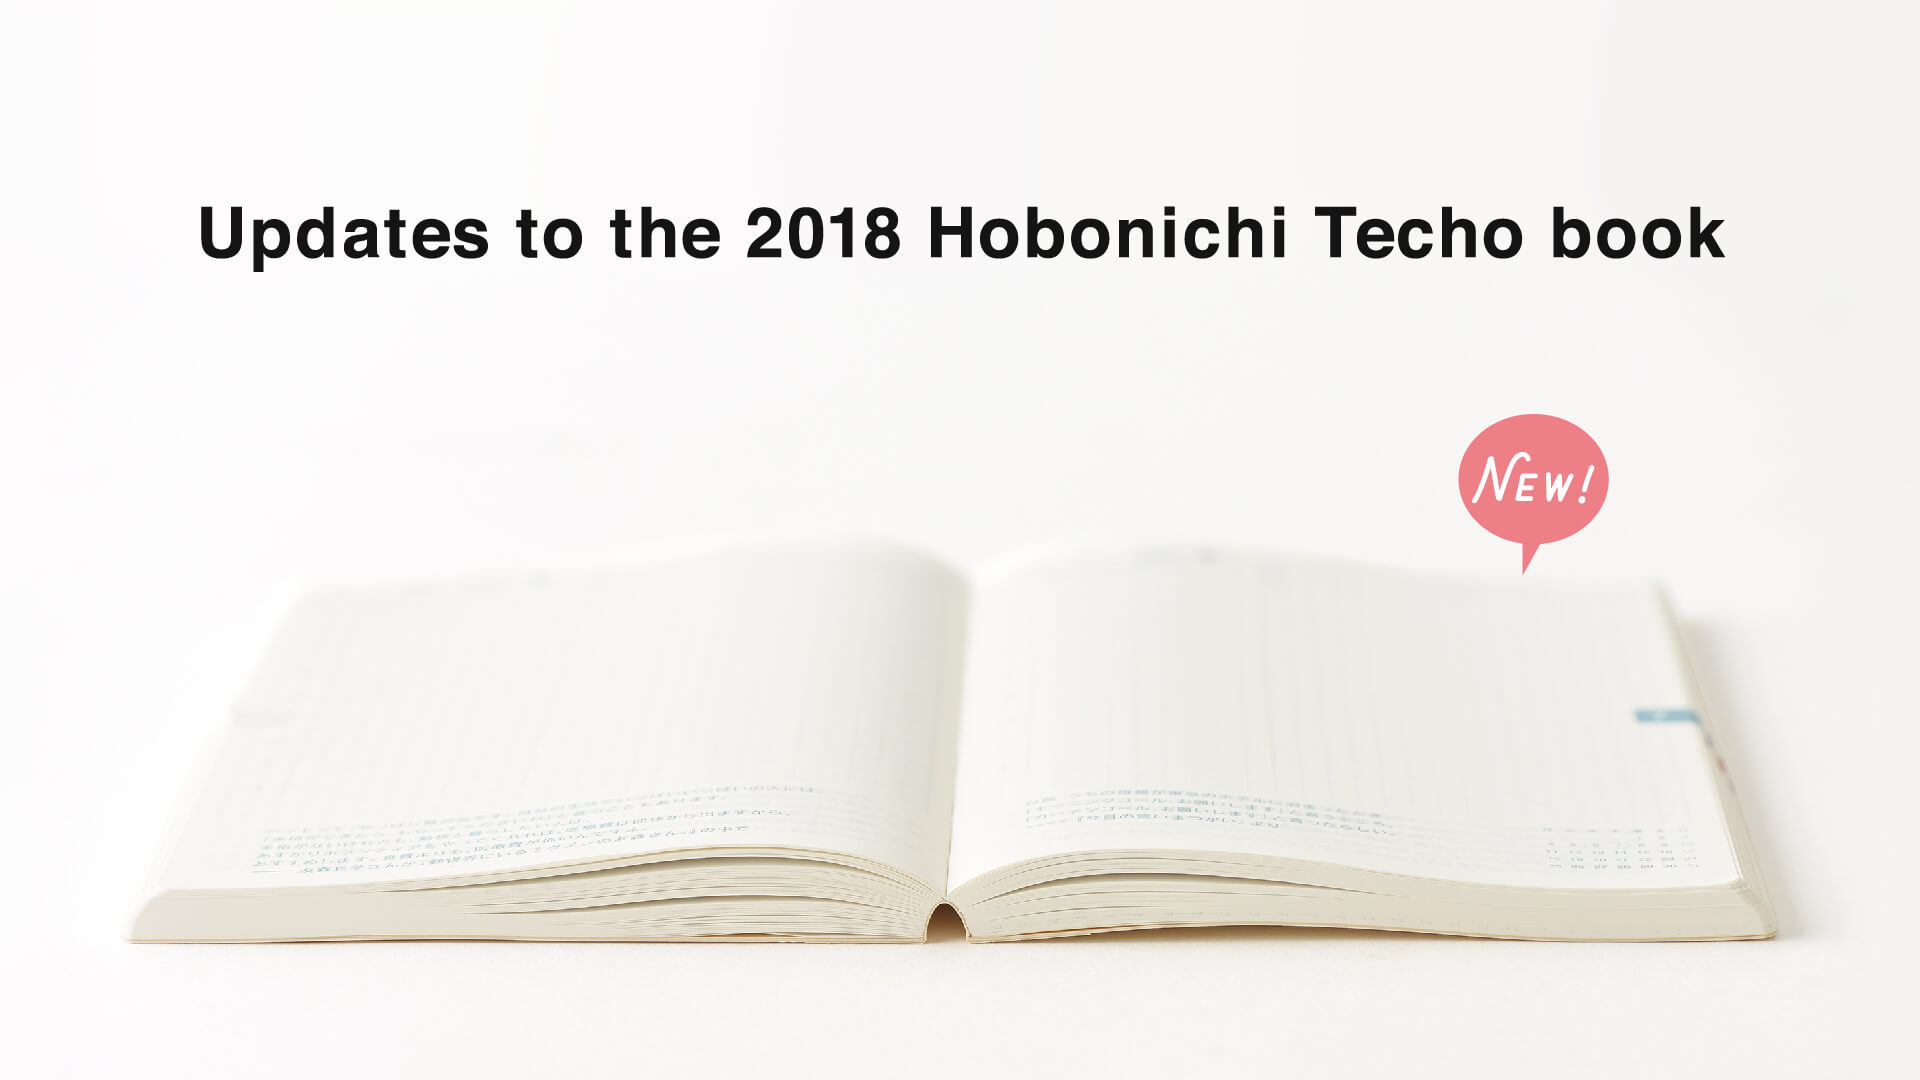 Updates to the 2018 Hobonichi Techo book